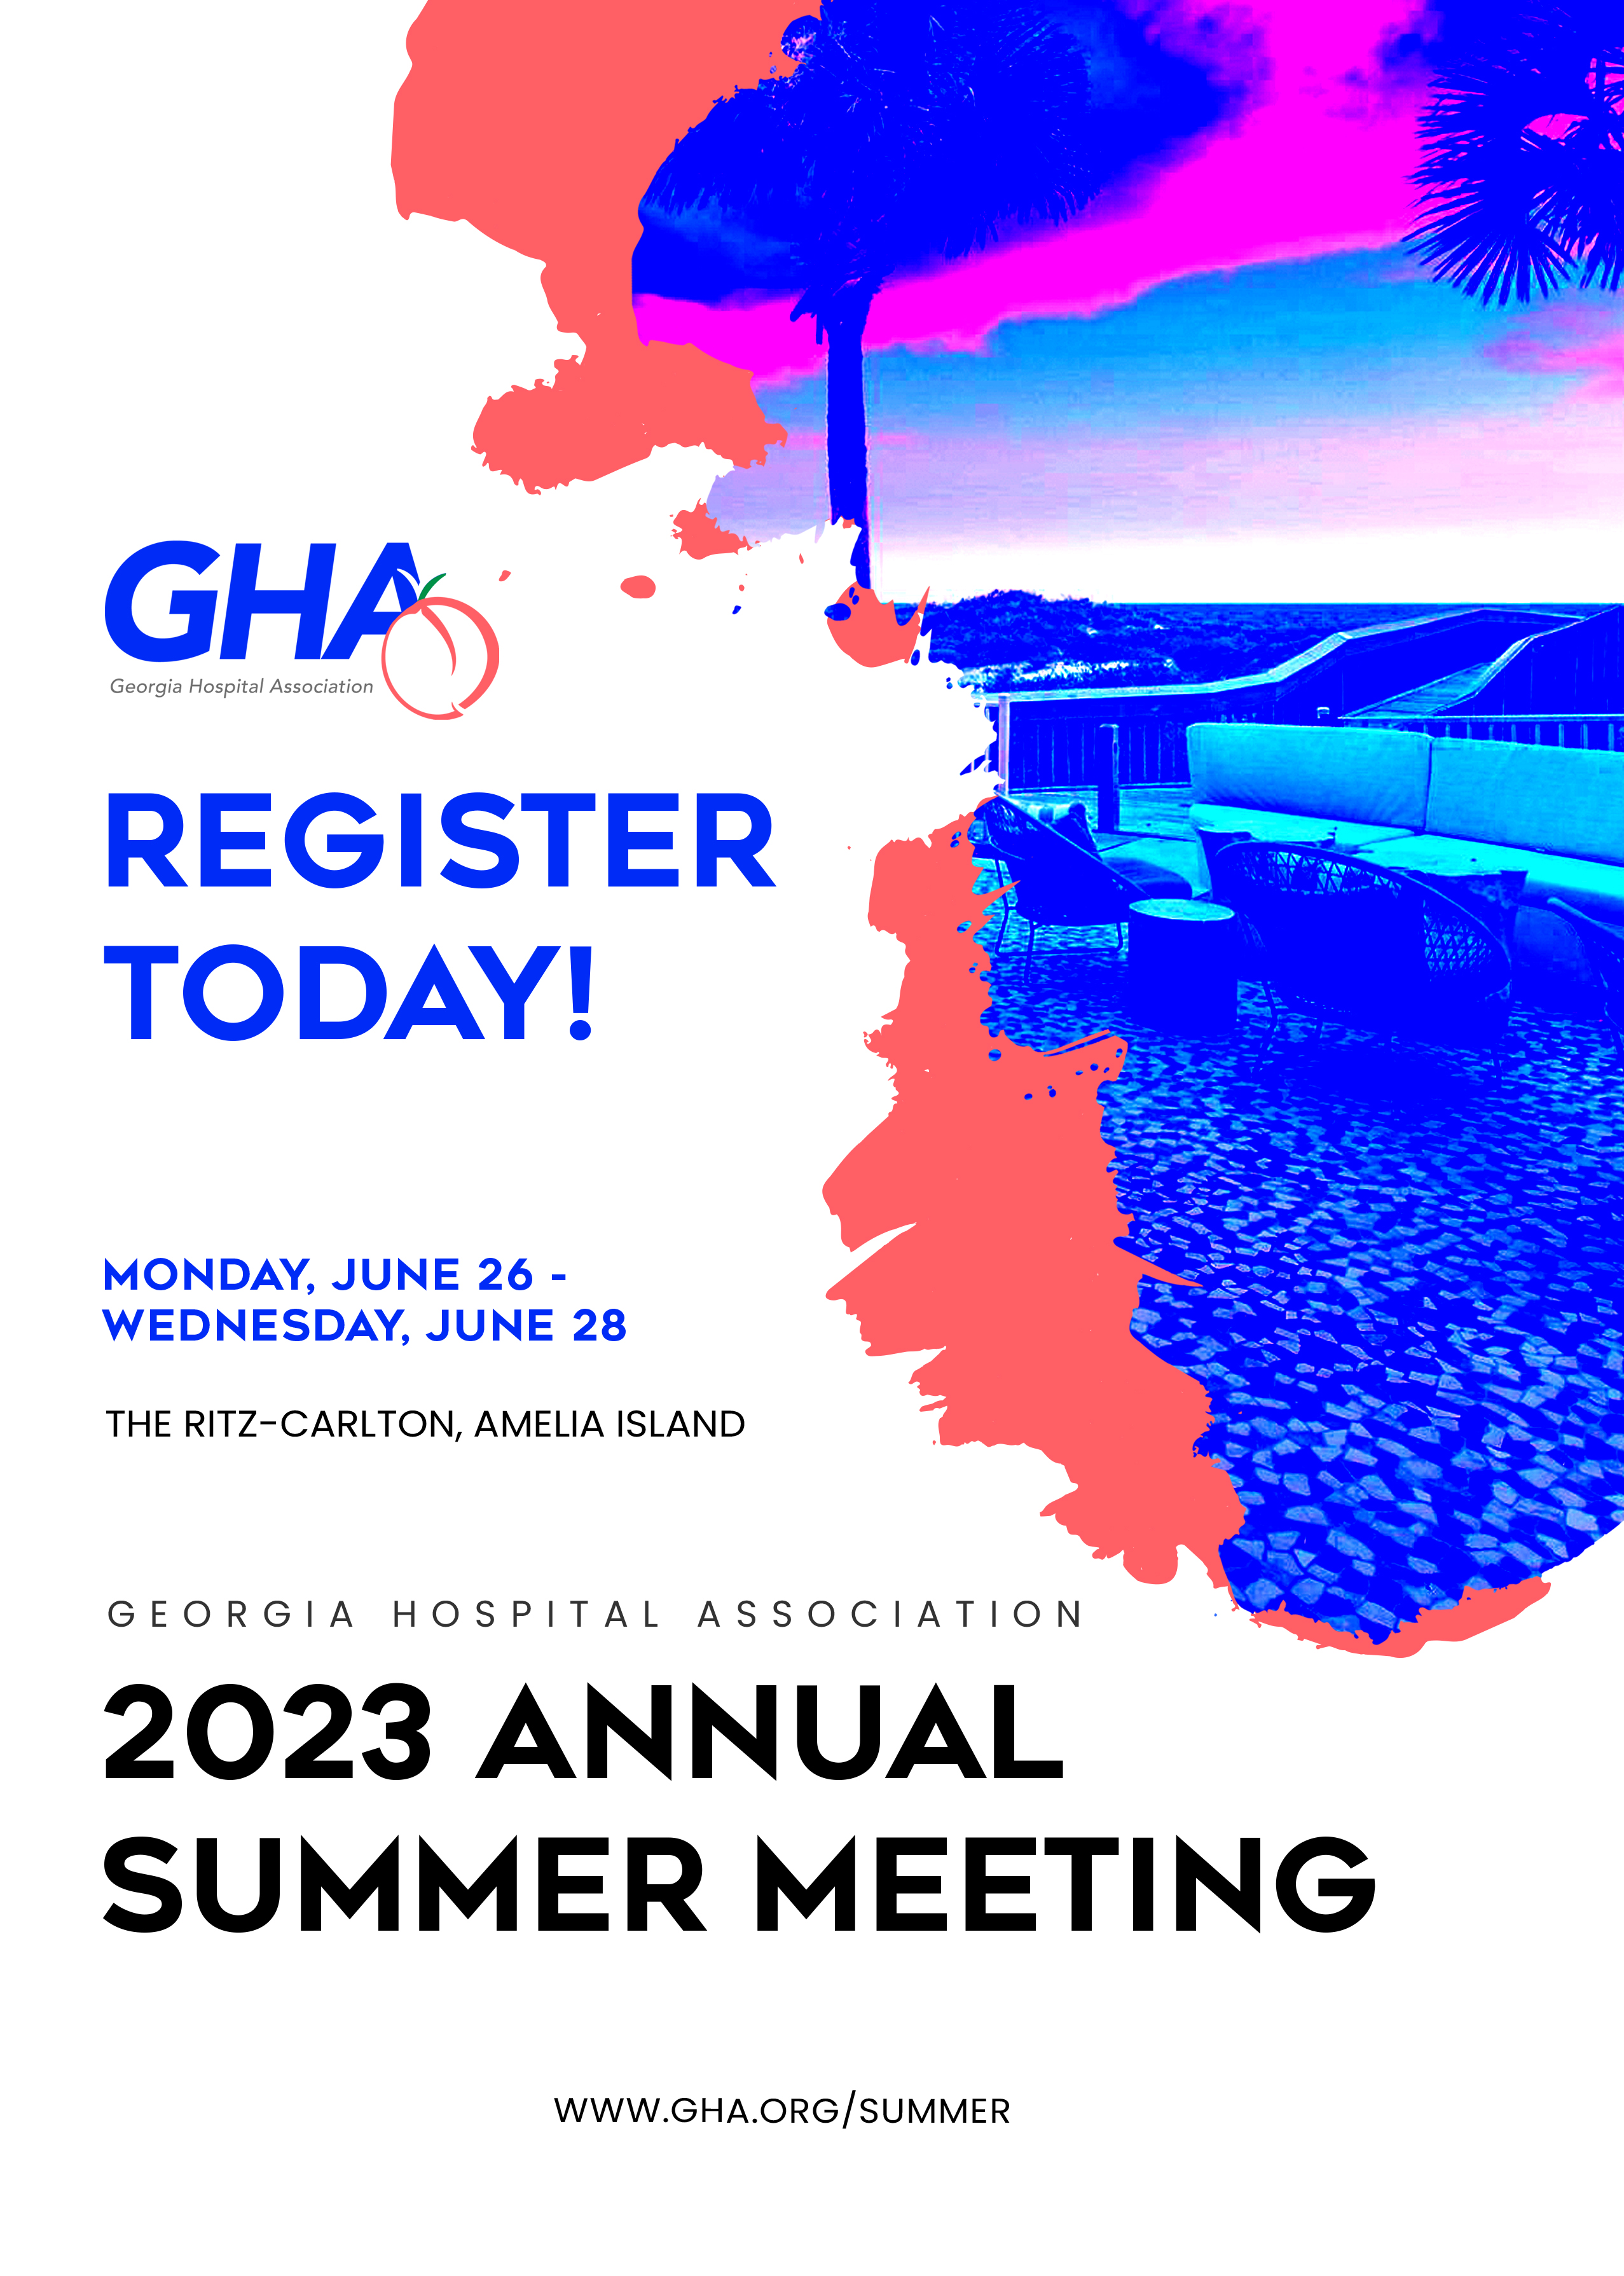 GHA Register Today! Monday, June 26-Wednesday, June 28 The Ritz-Carlton, Amelia Island Georgia Hospital Association 2023 Annual Summer Meeting www.gha.org/summer